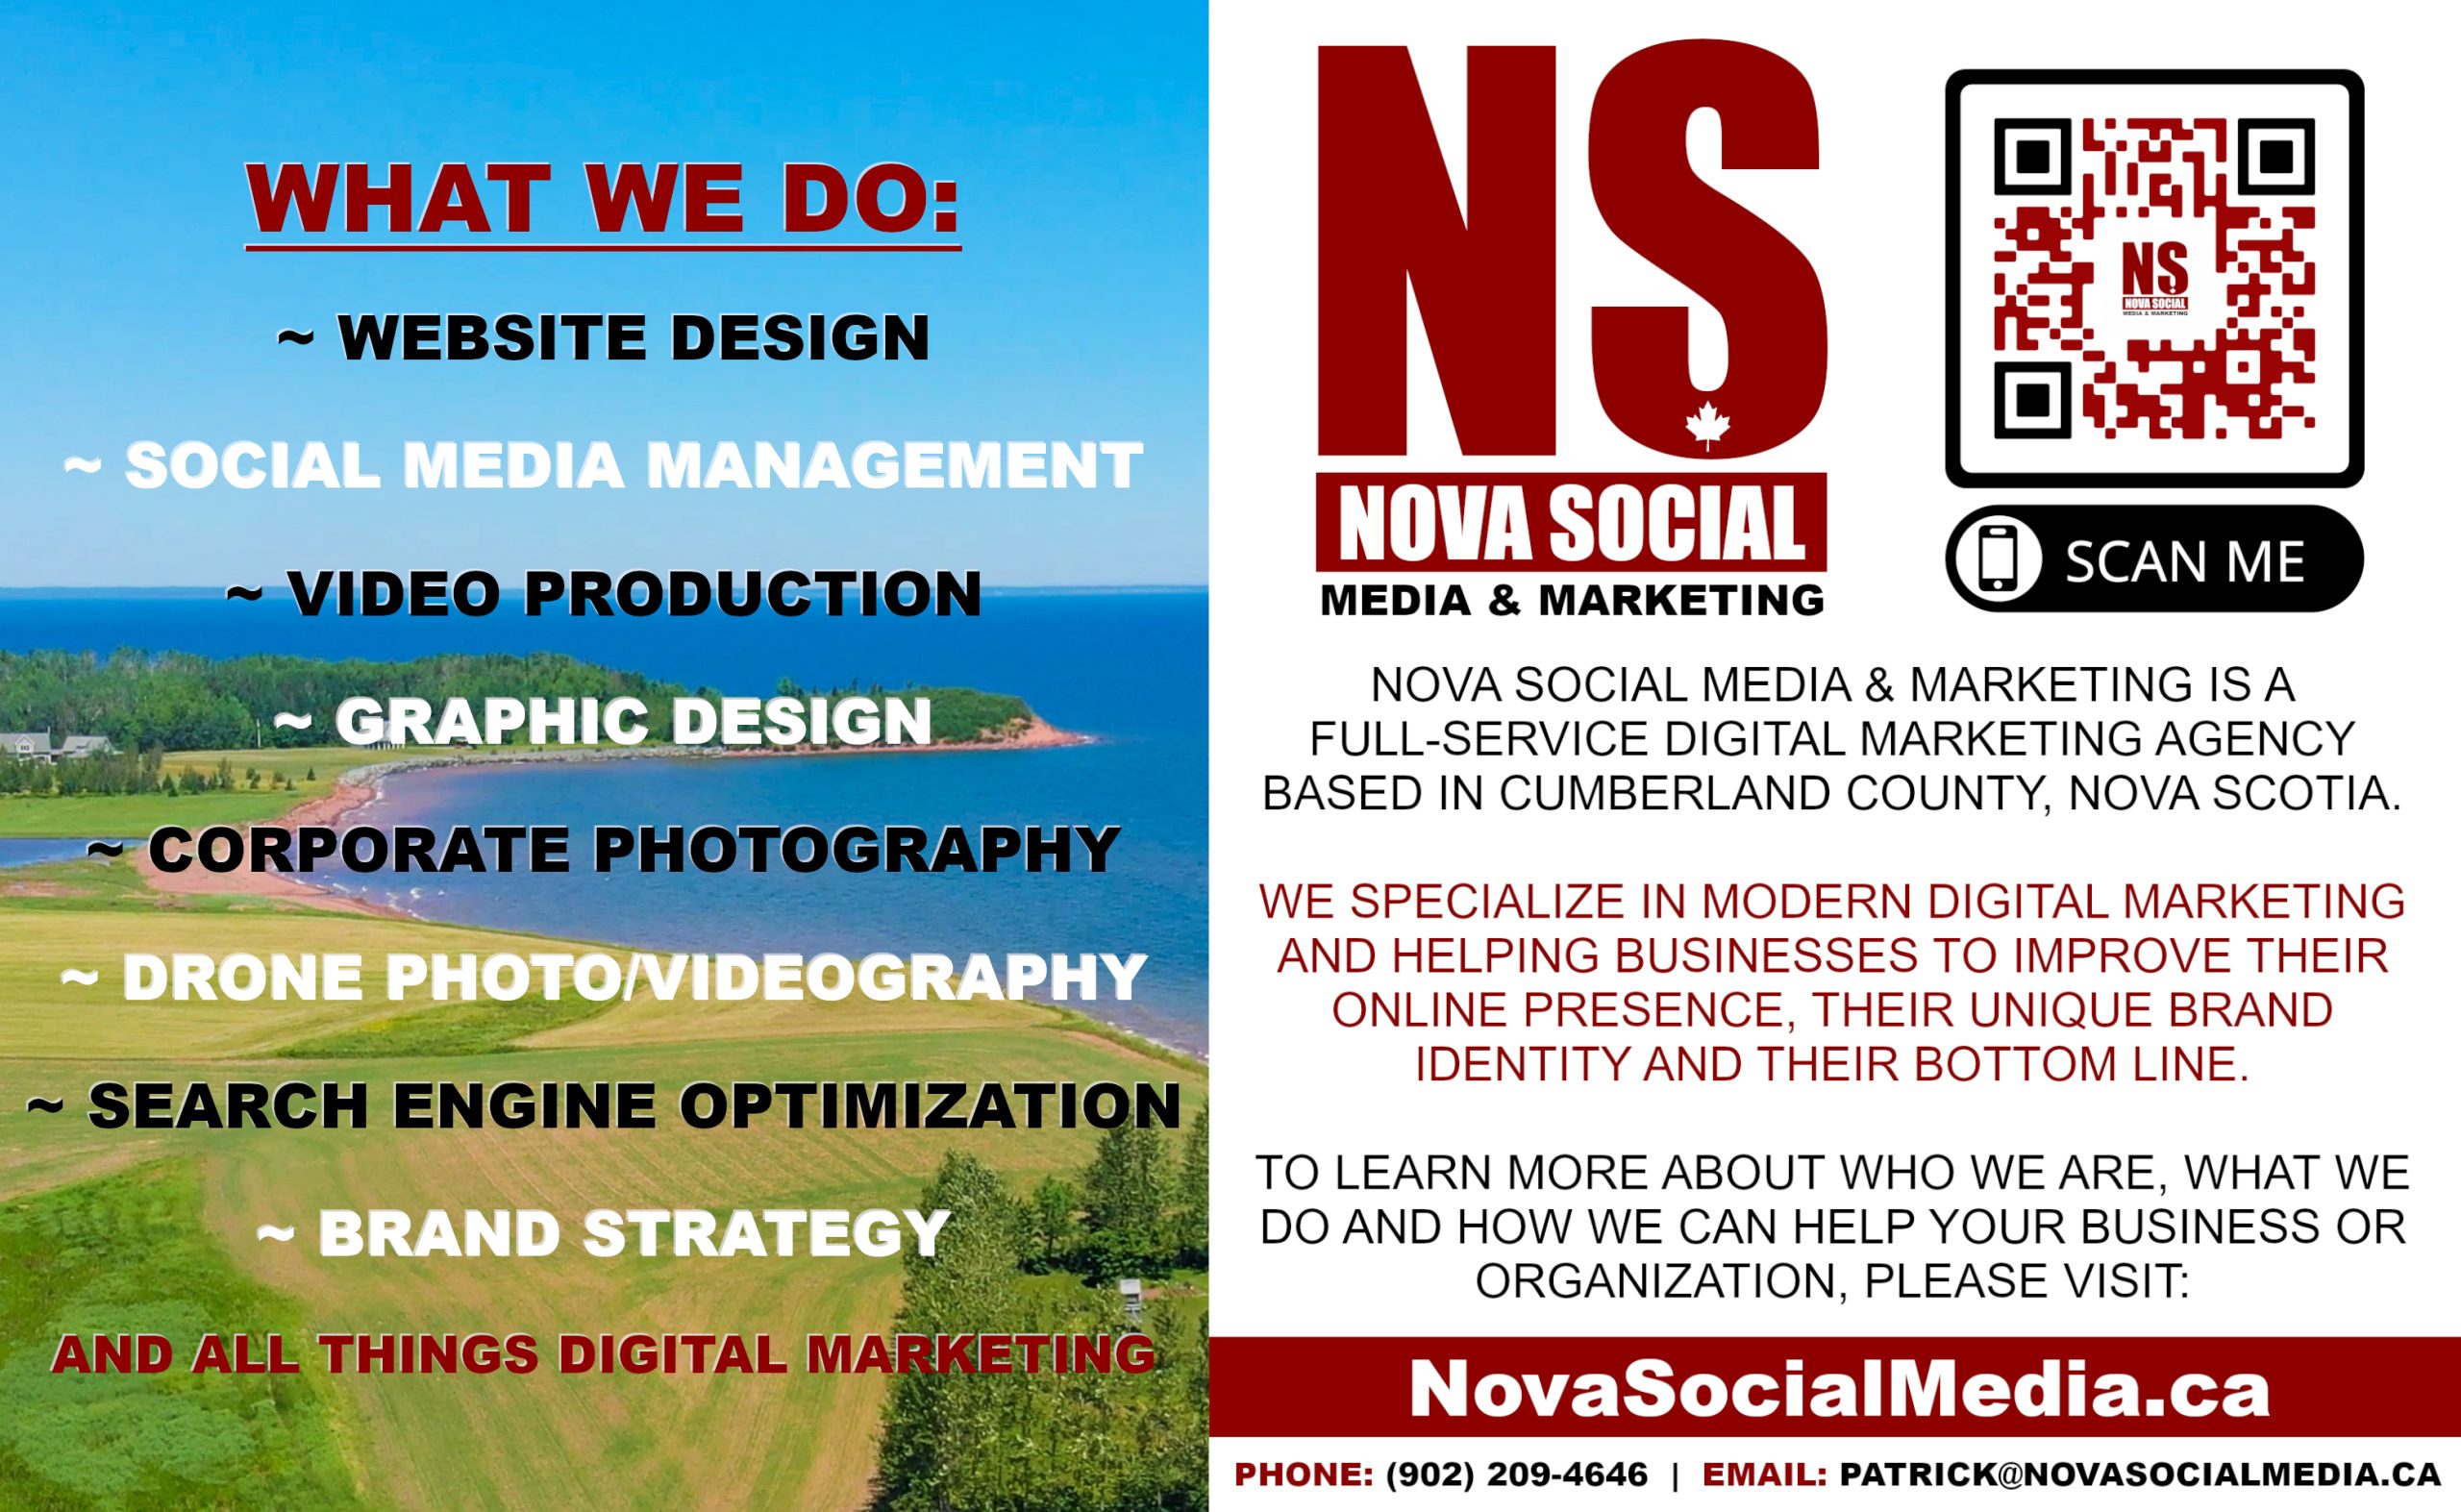 NOVA SOCIAL Media & Marketing Ad from Paper back page